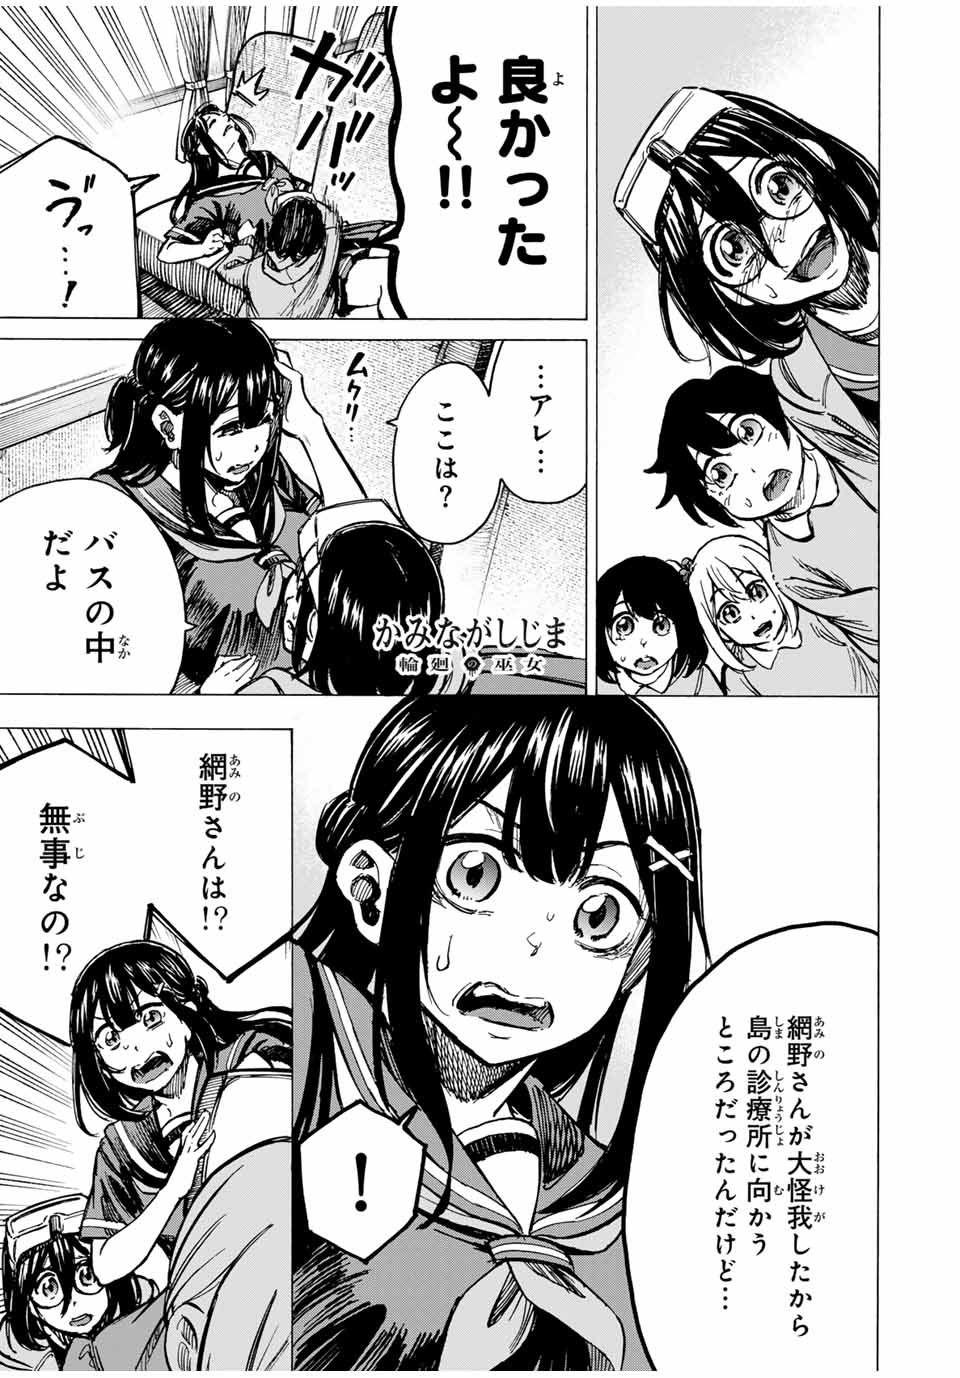 Kaminagashijima – Rinne no Miko - Chapter 20 - Page 1